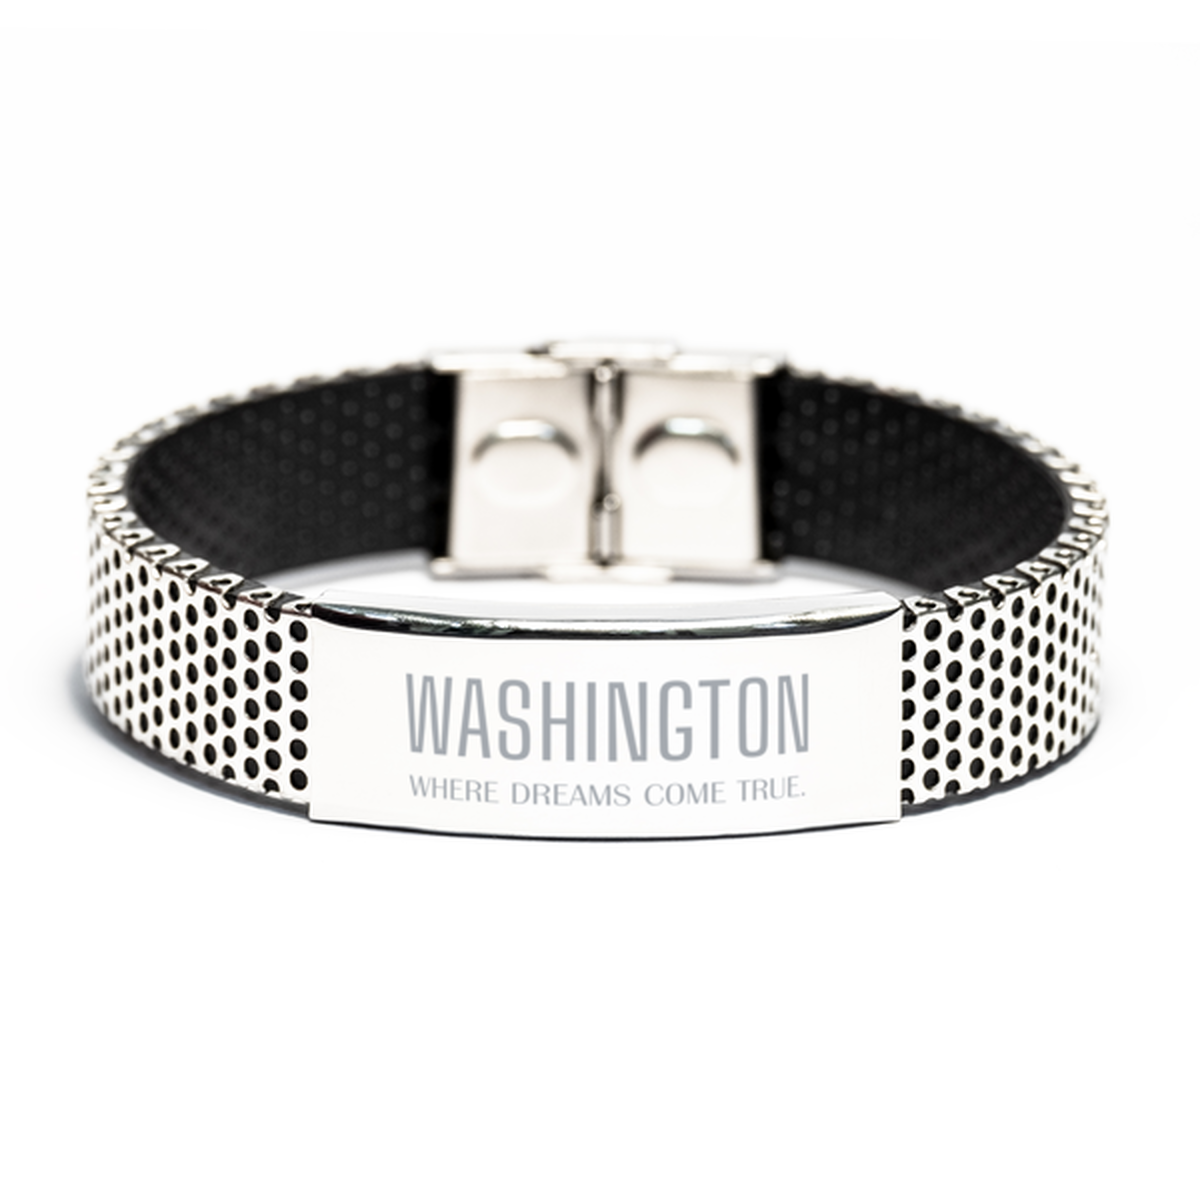 Love Washington State Stainless Steel Bracelet, Washington Where dreams come true, Birthday Inspirational Gifts For Washington Men, Women, Friends